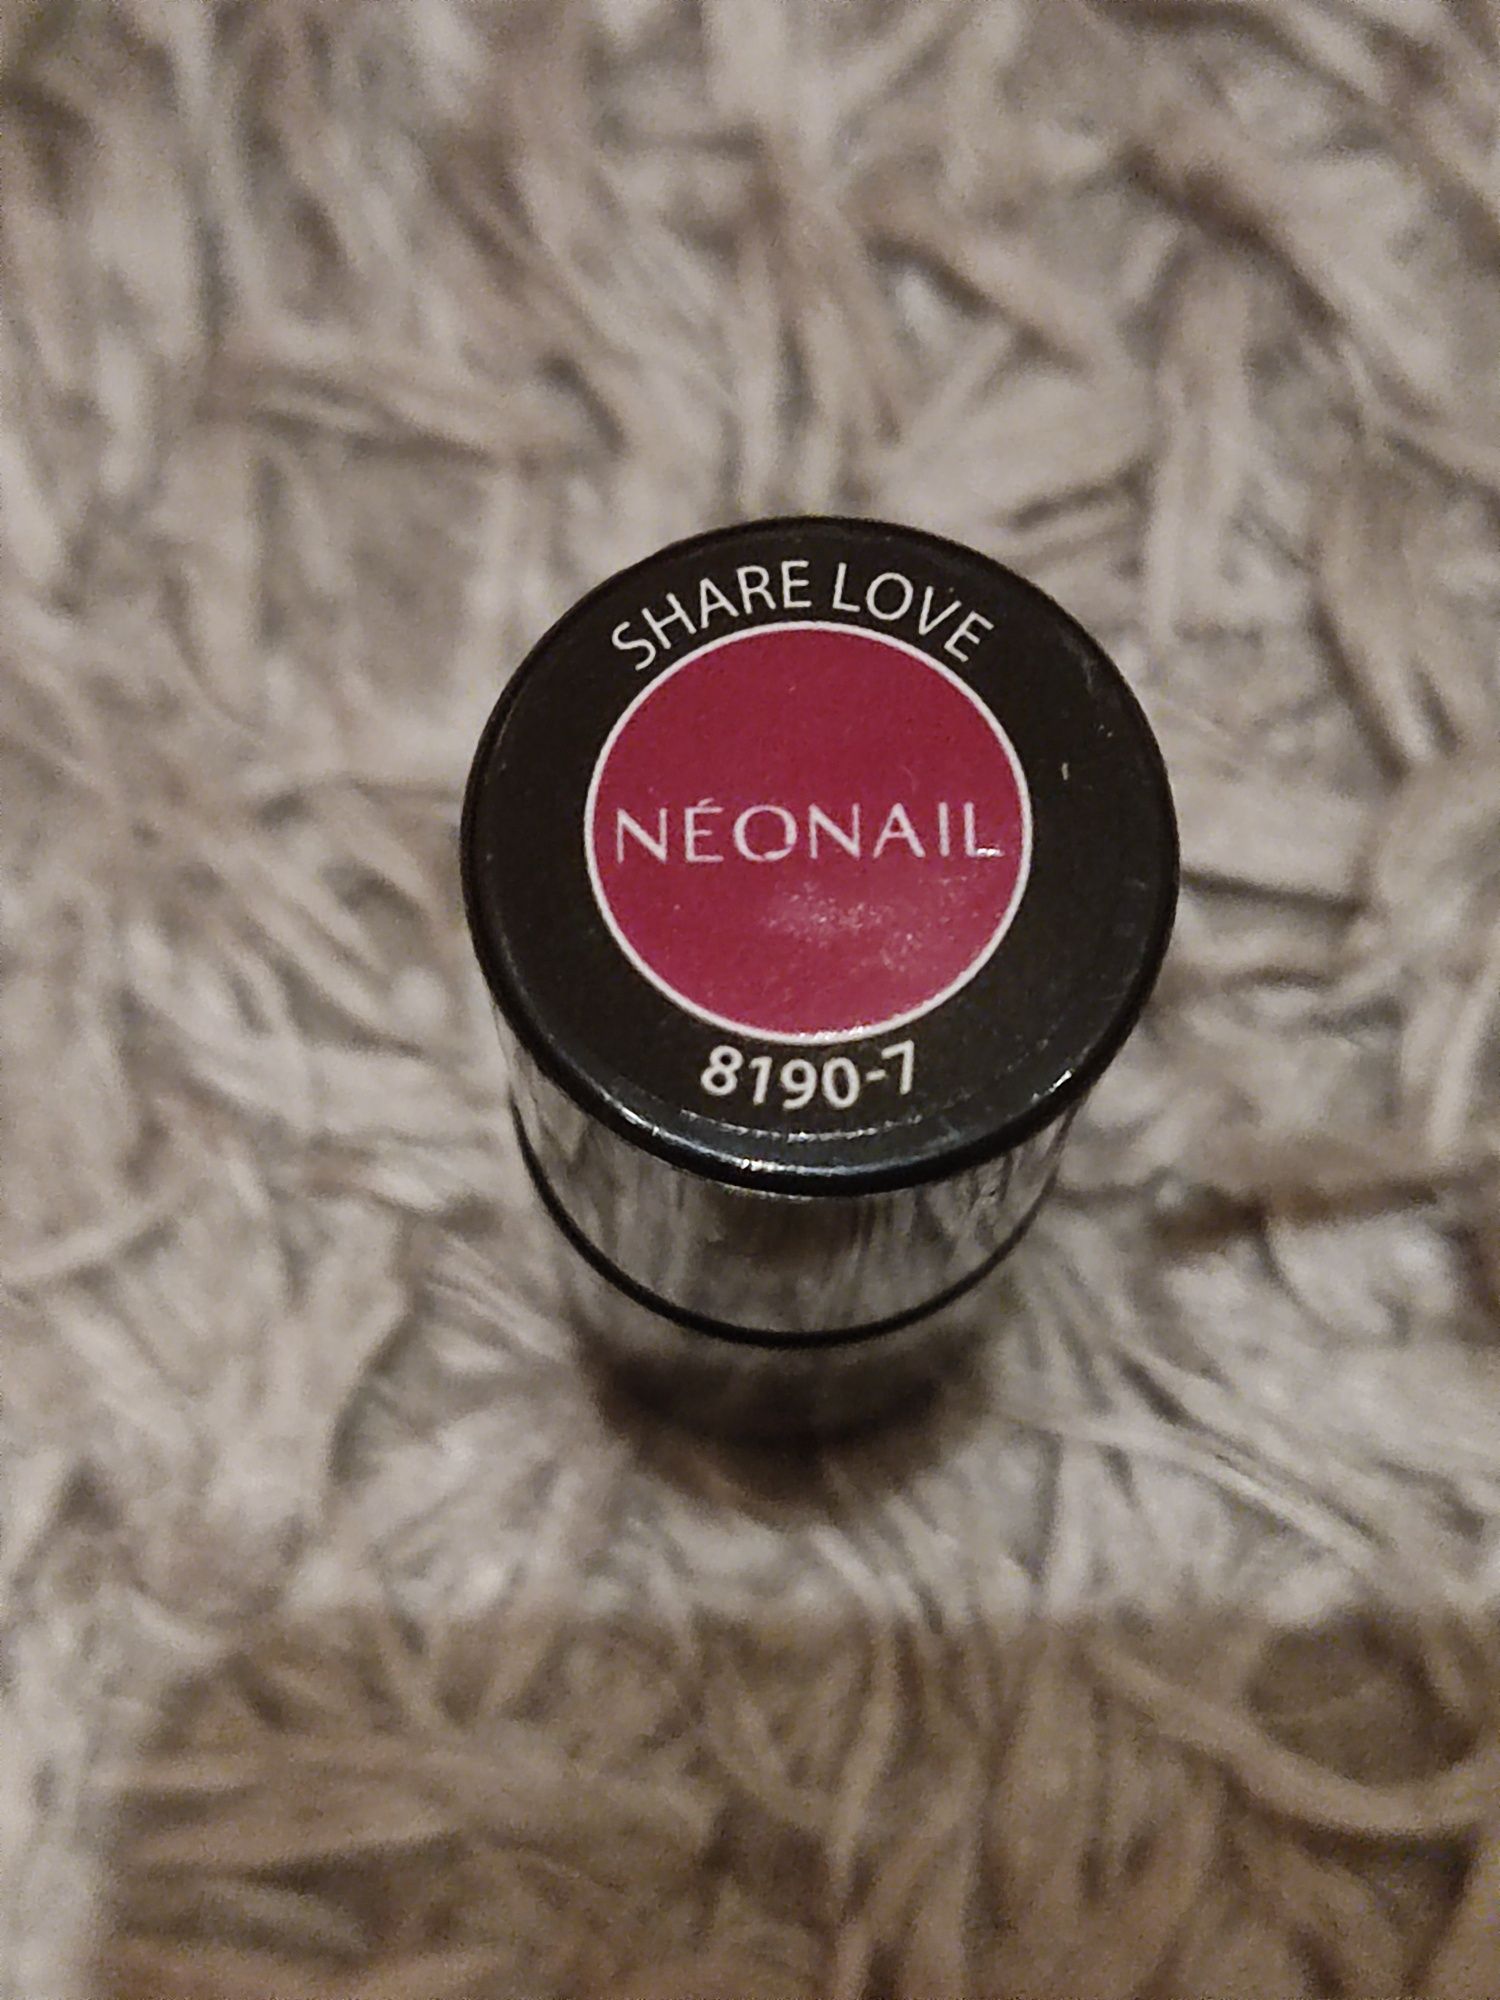 Nowy lakier hybrydowy neonail share love 8190-7 manicure pielęgnacja